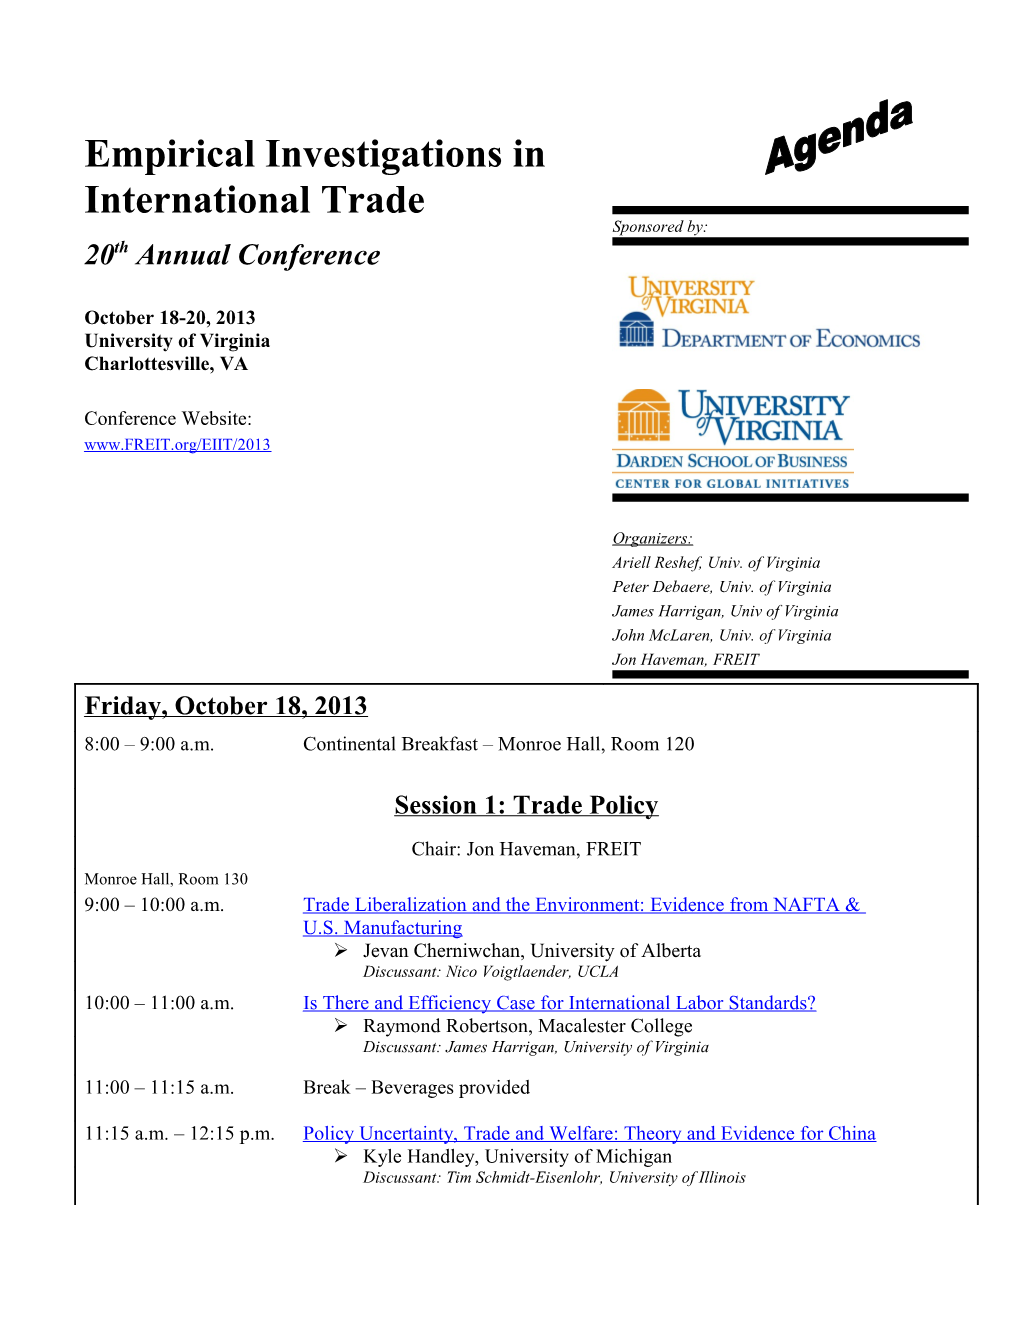 Empirical Investigations in International Trade s1